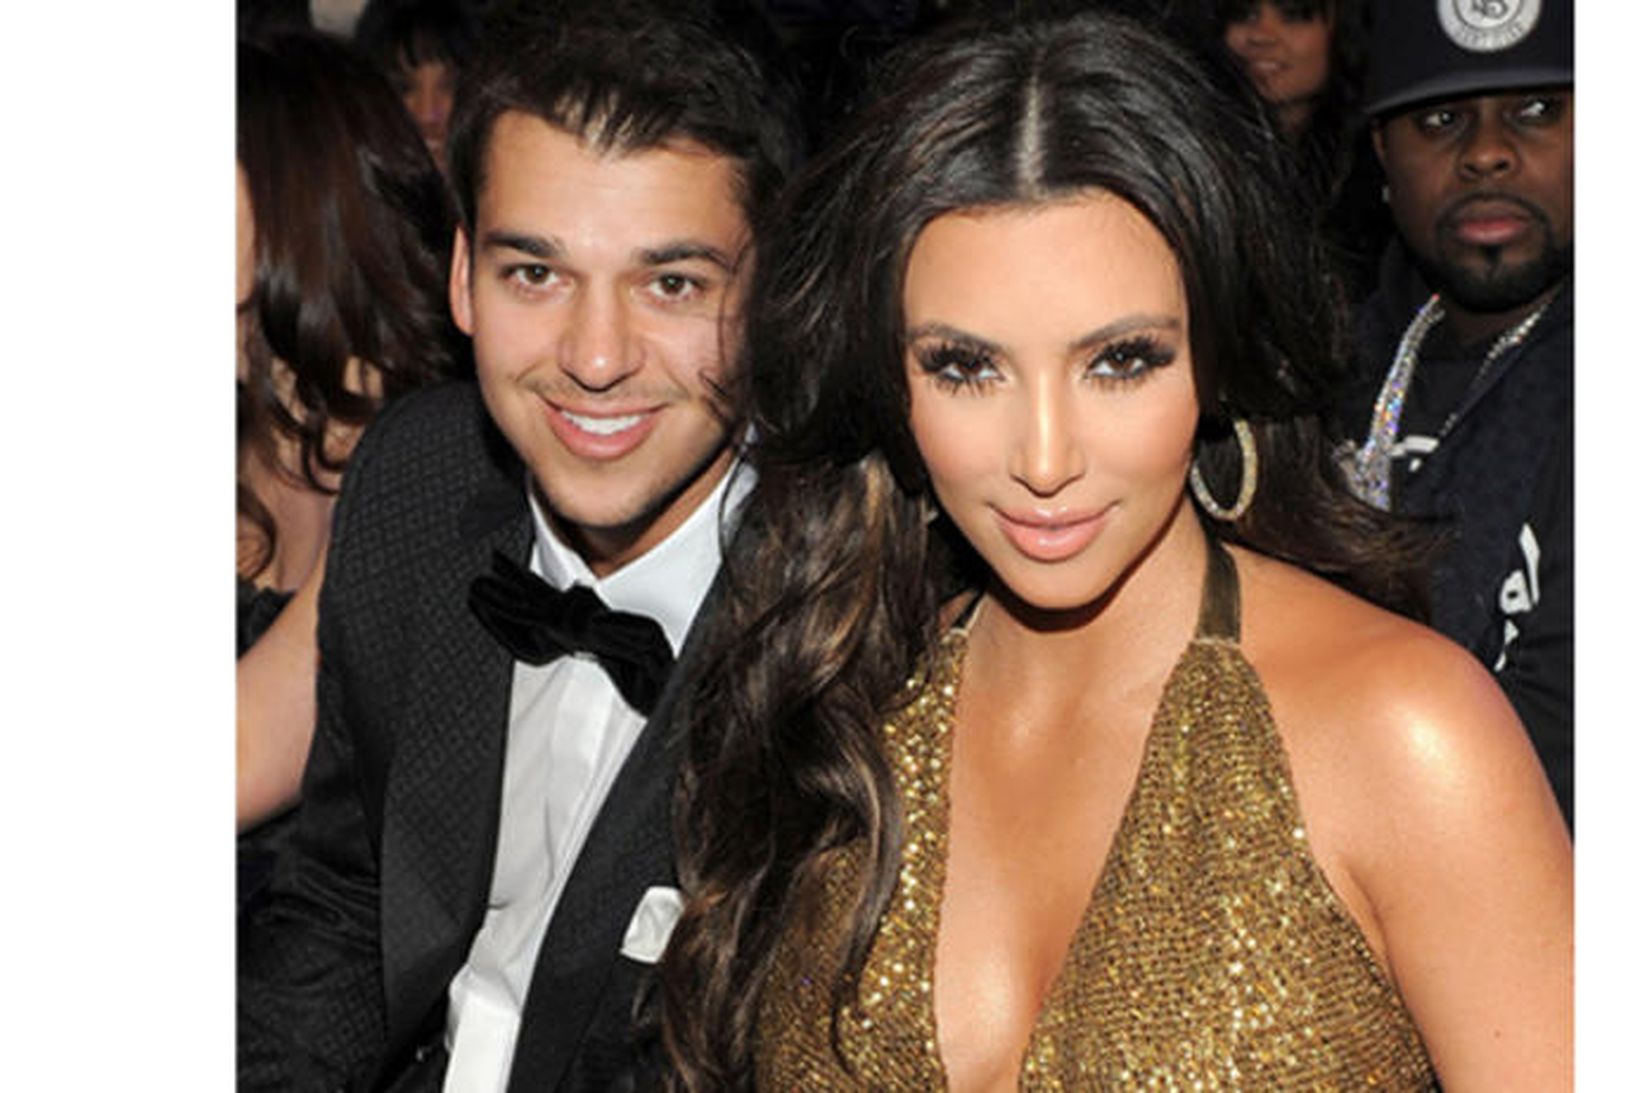 Rob Kardashian ásamt systur sinni, Kim.